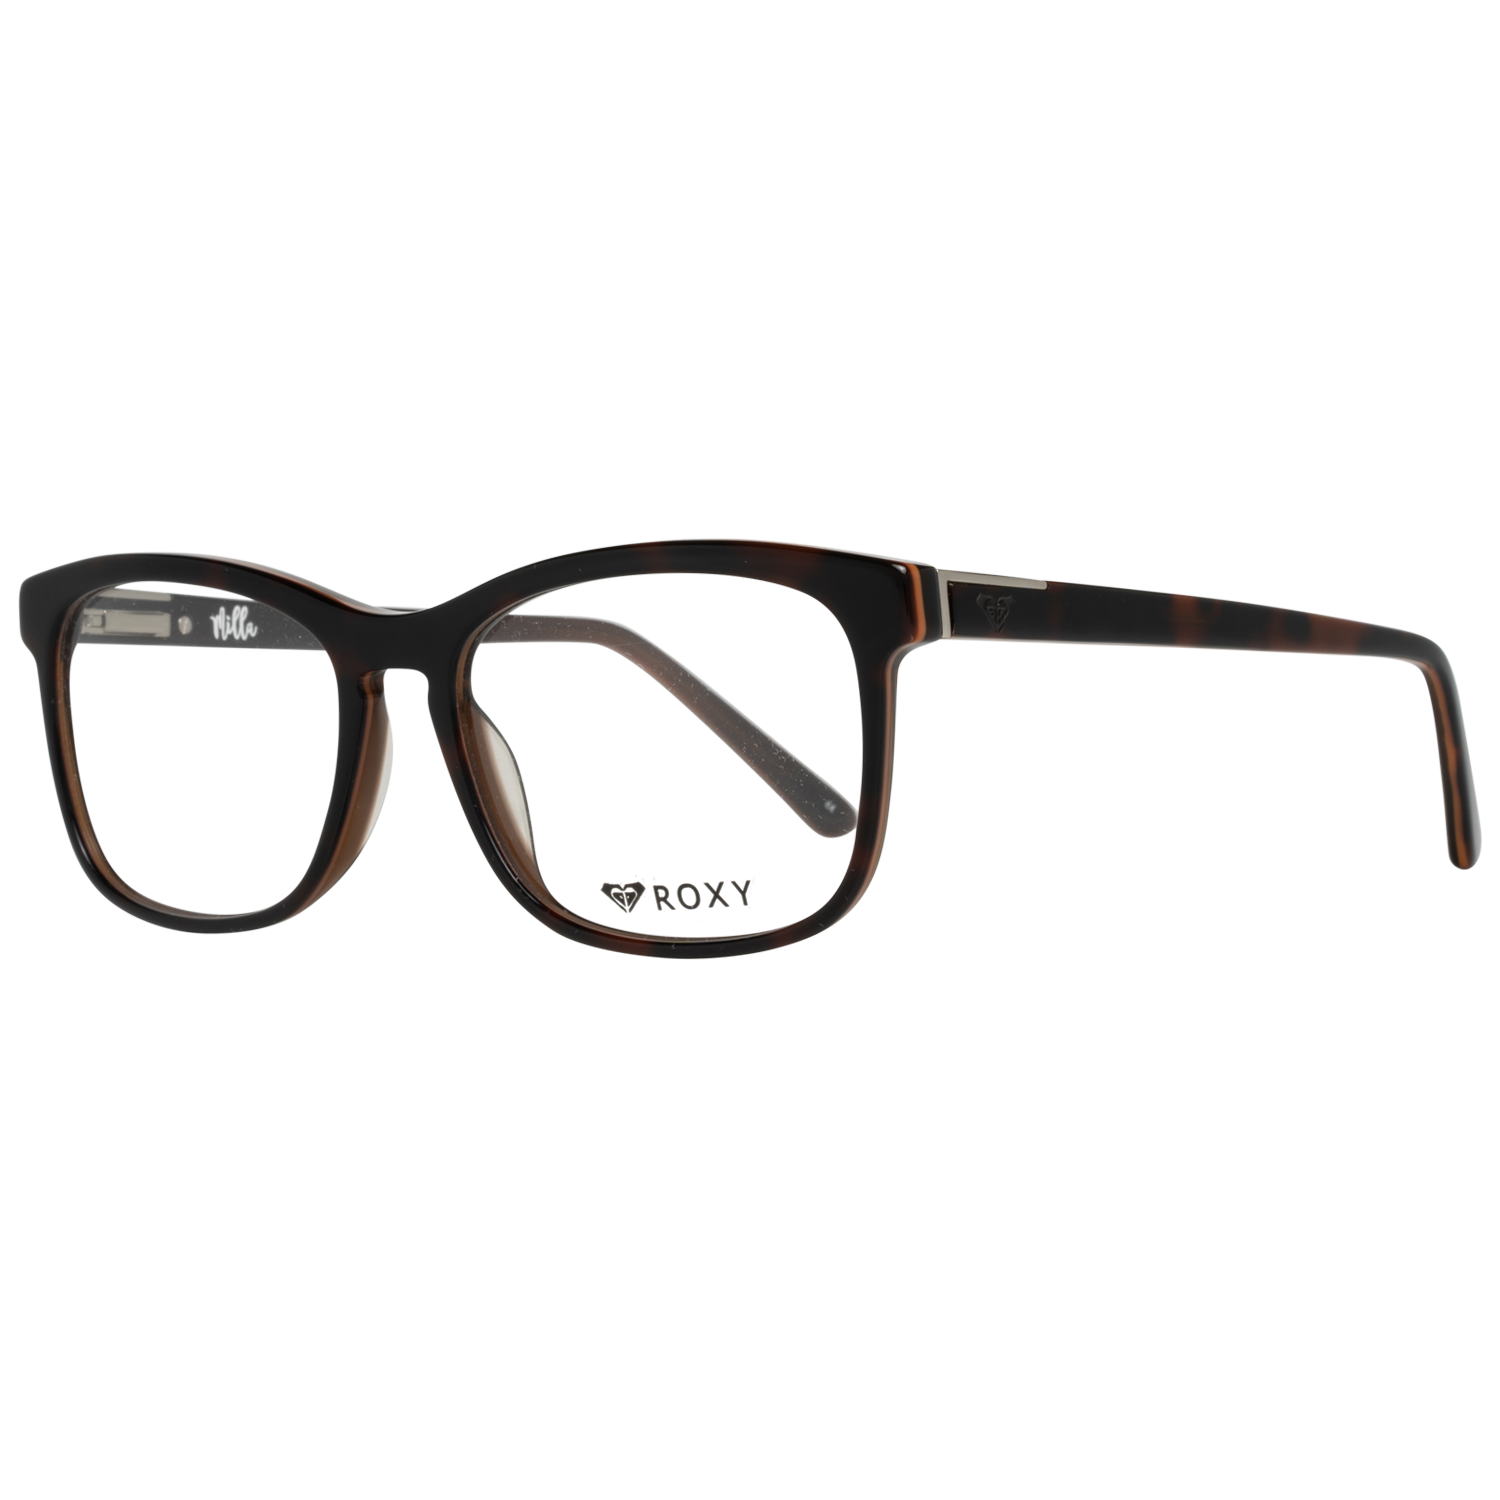 Roxy Frames Roxy Glasses Optical Frame ERJEG03029 ABRN 52 Eyeglasses Eyewear UK USA Australia 